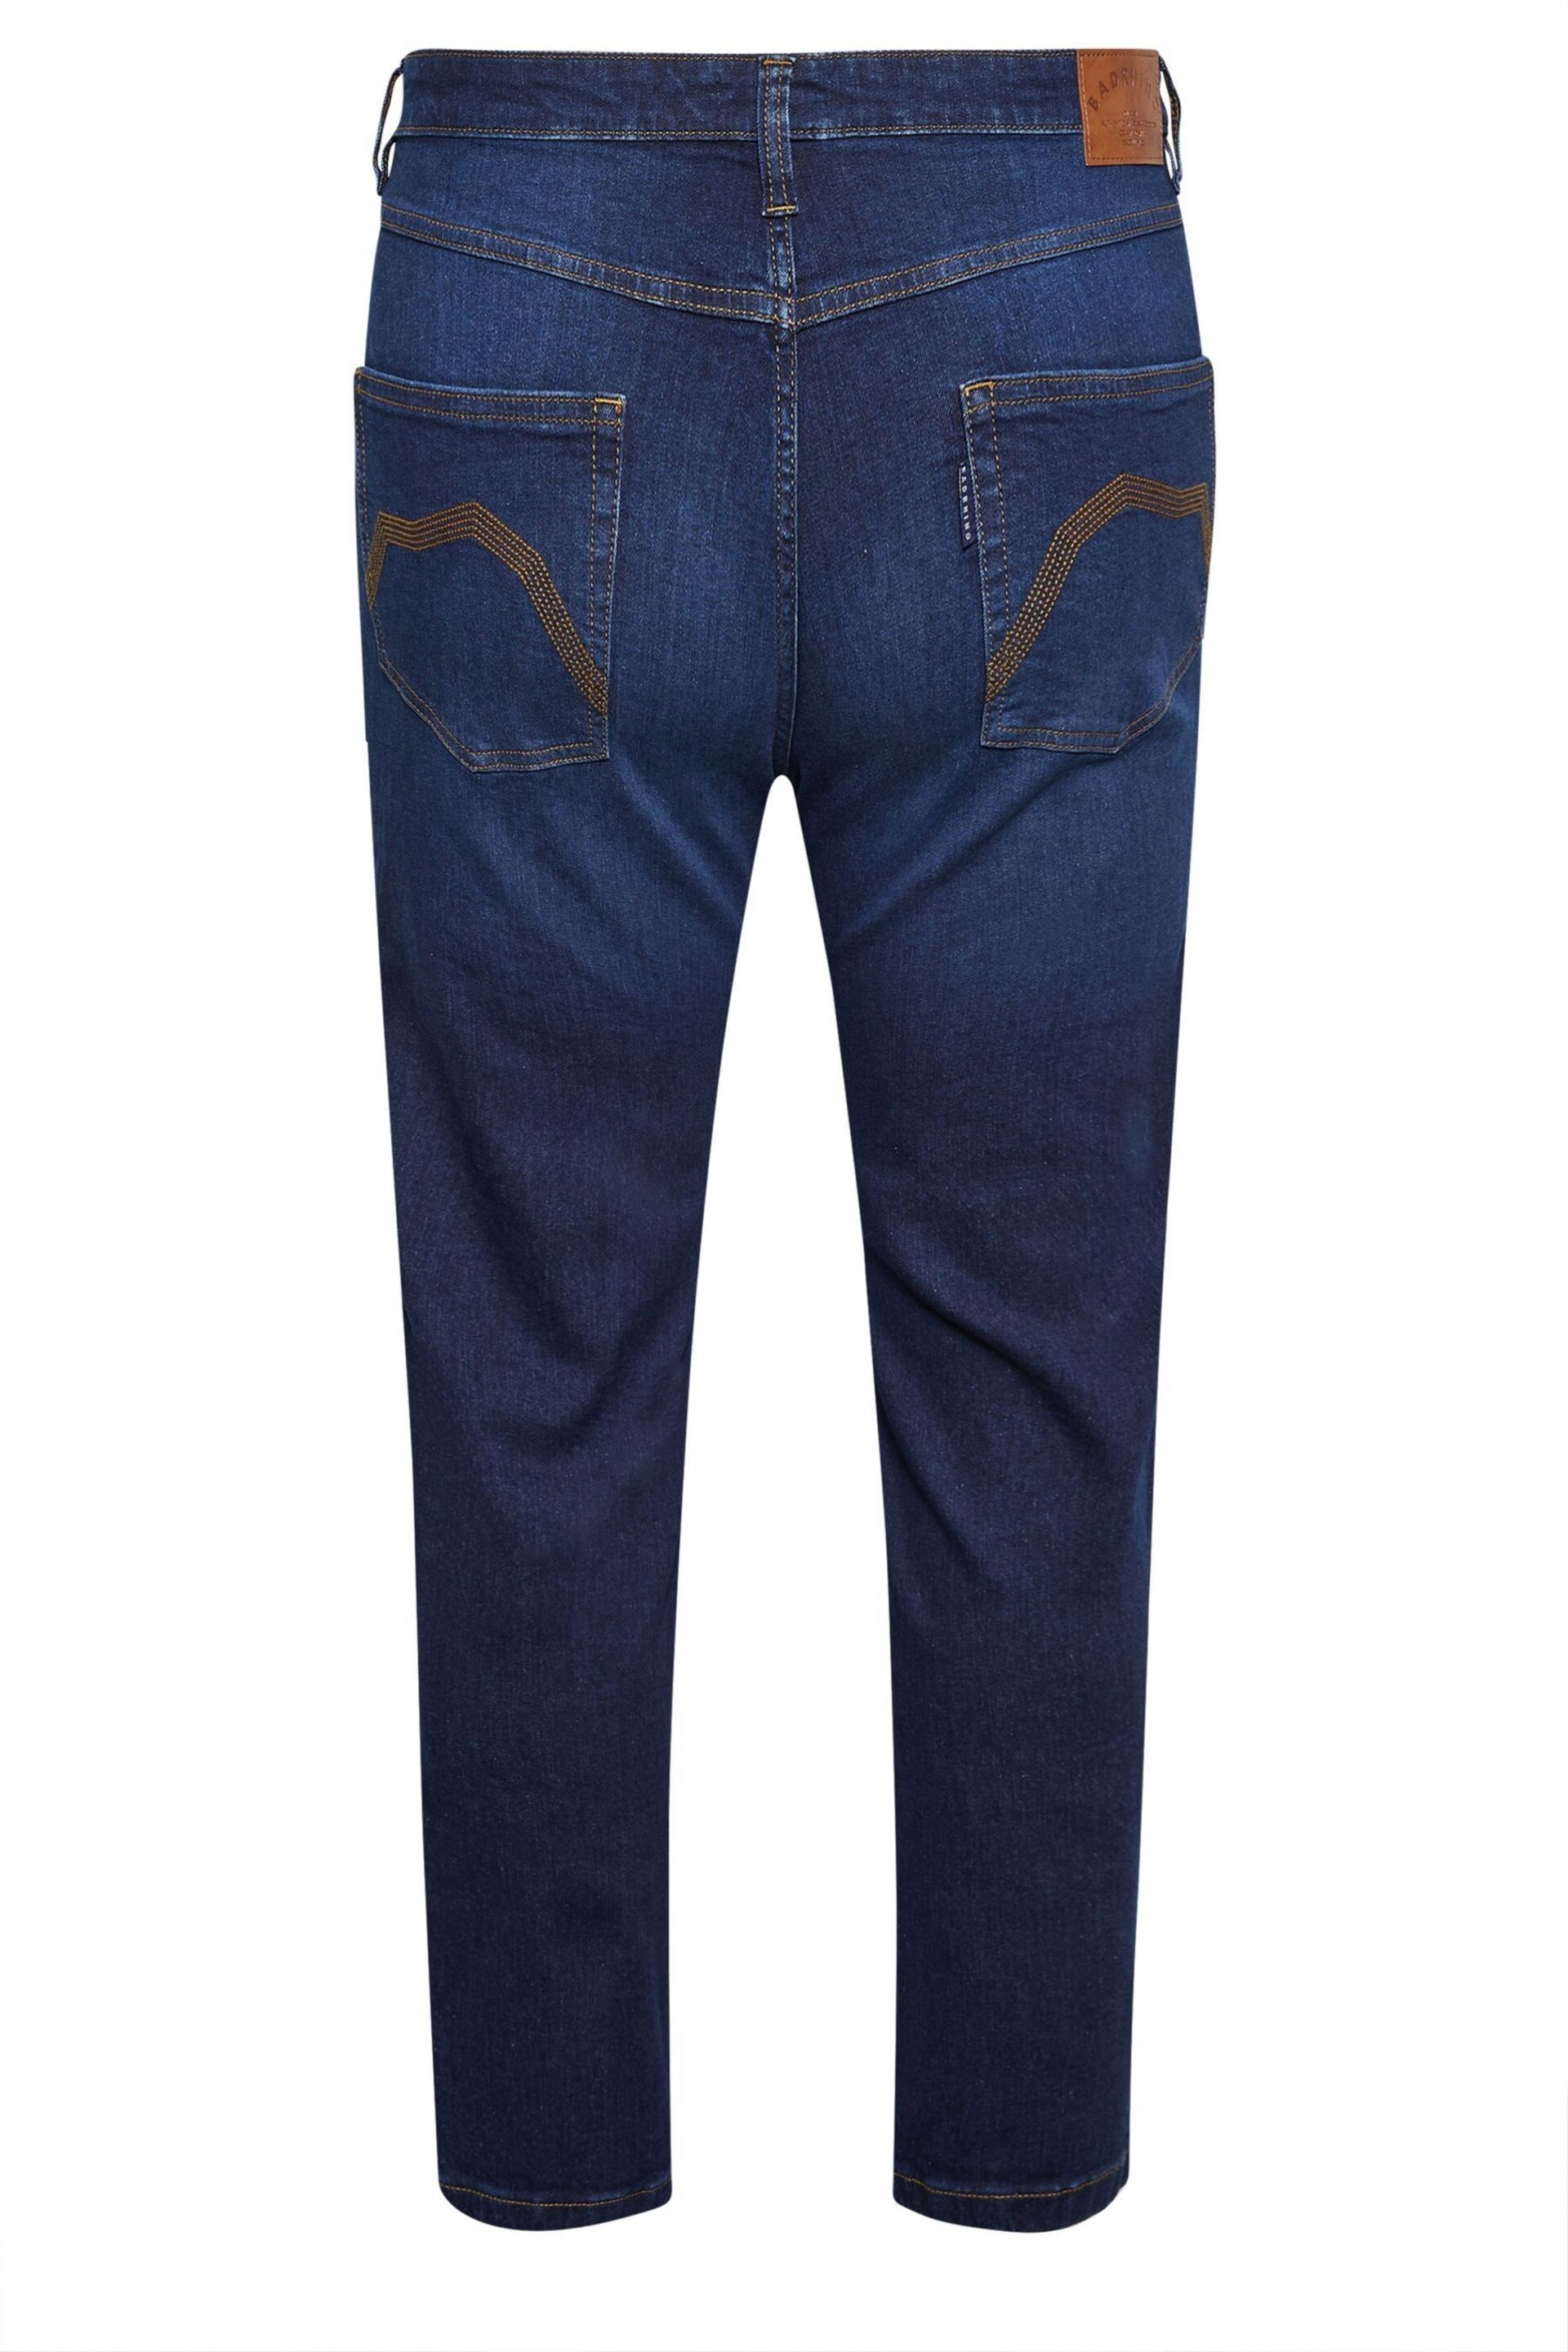 BadRhino Big & Tall Dark Blue Washed Denim Jeans - Image 4 of 4